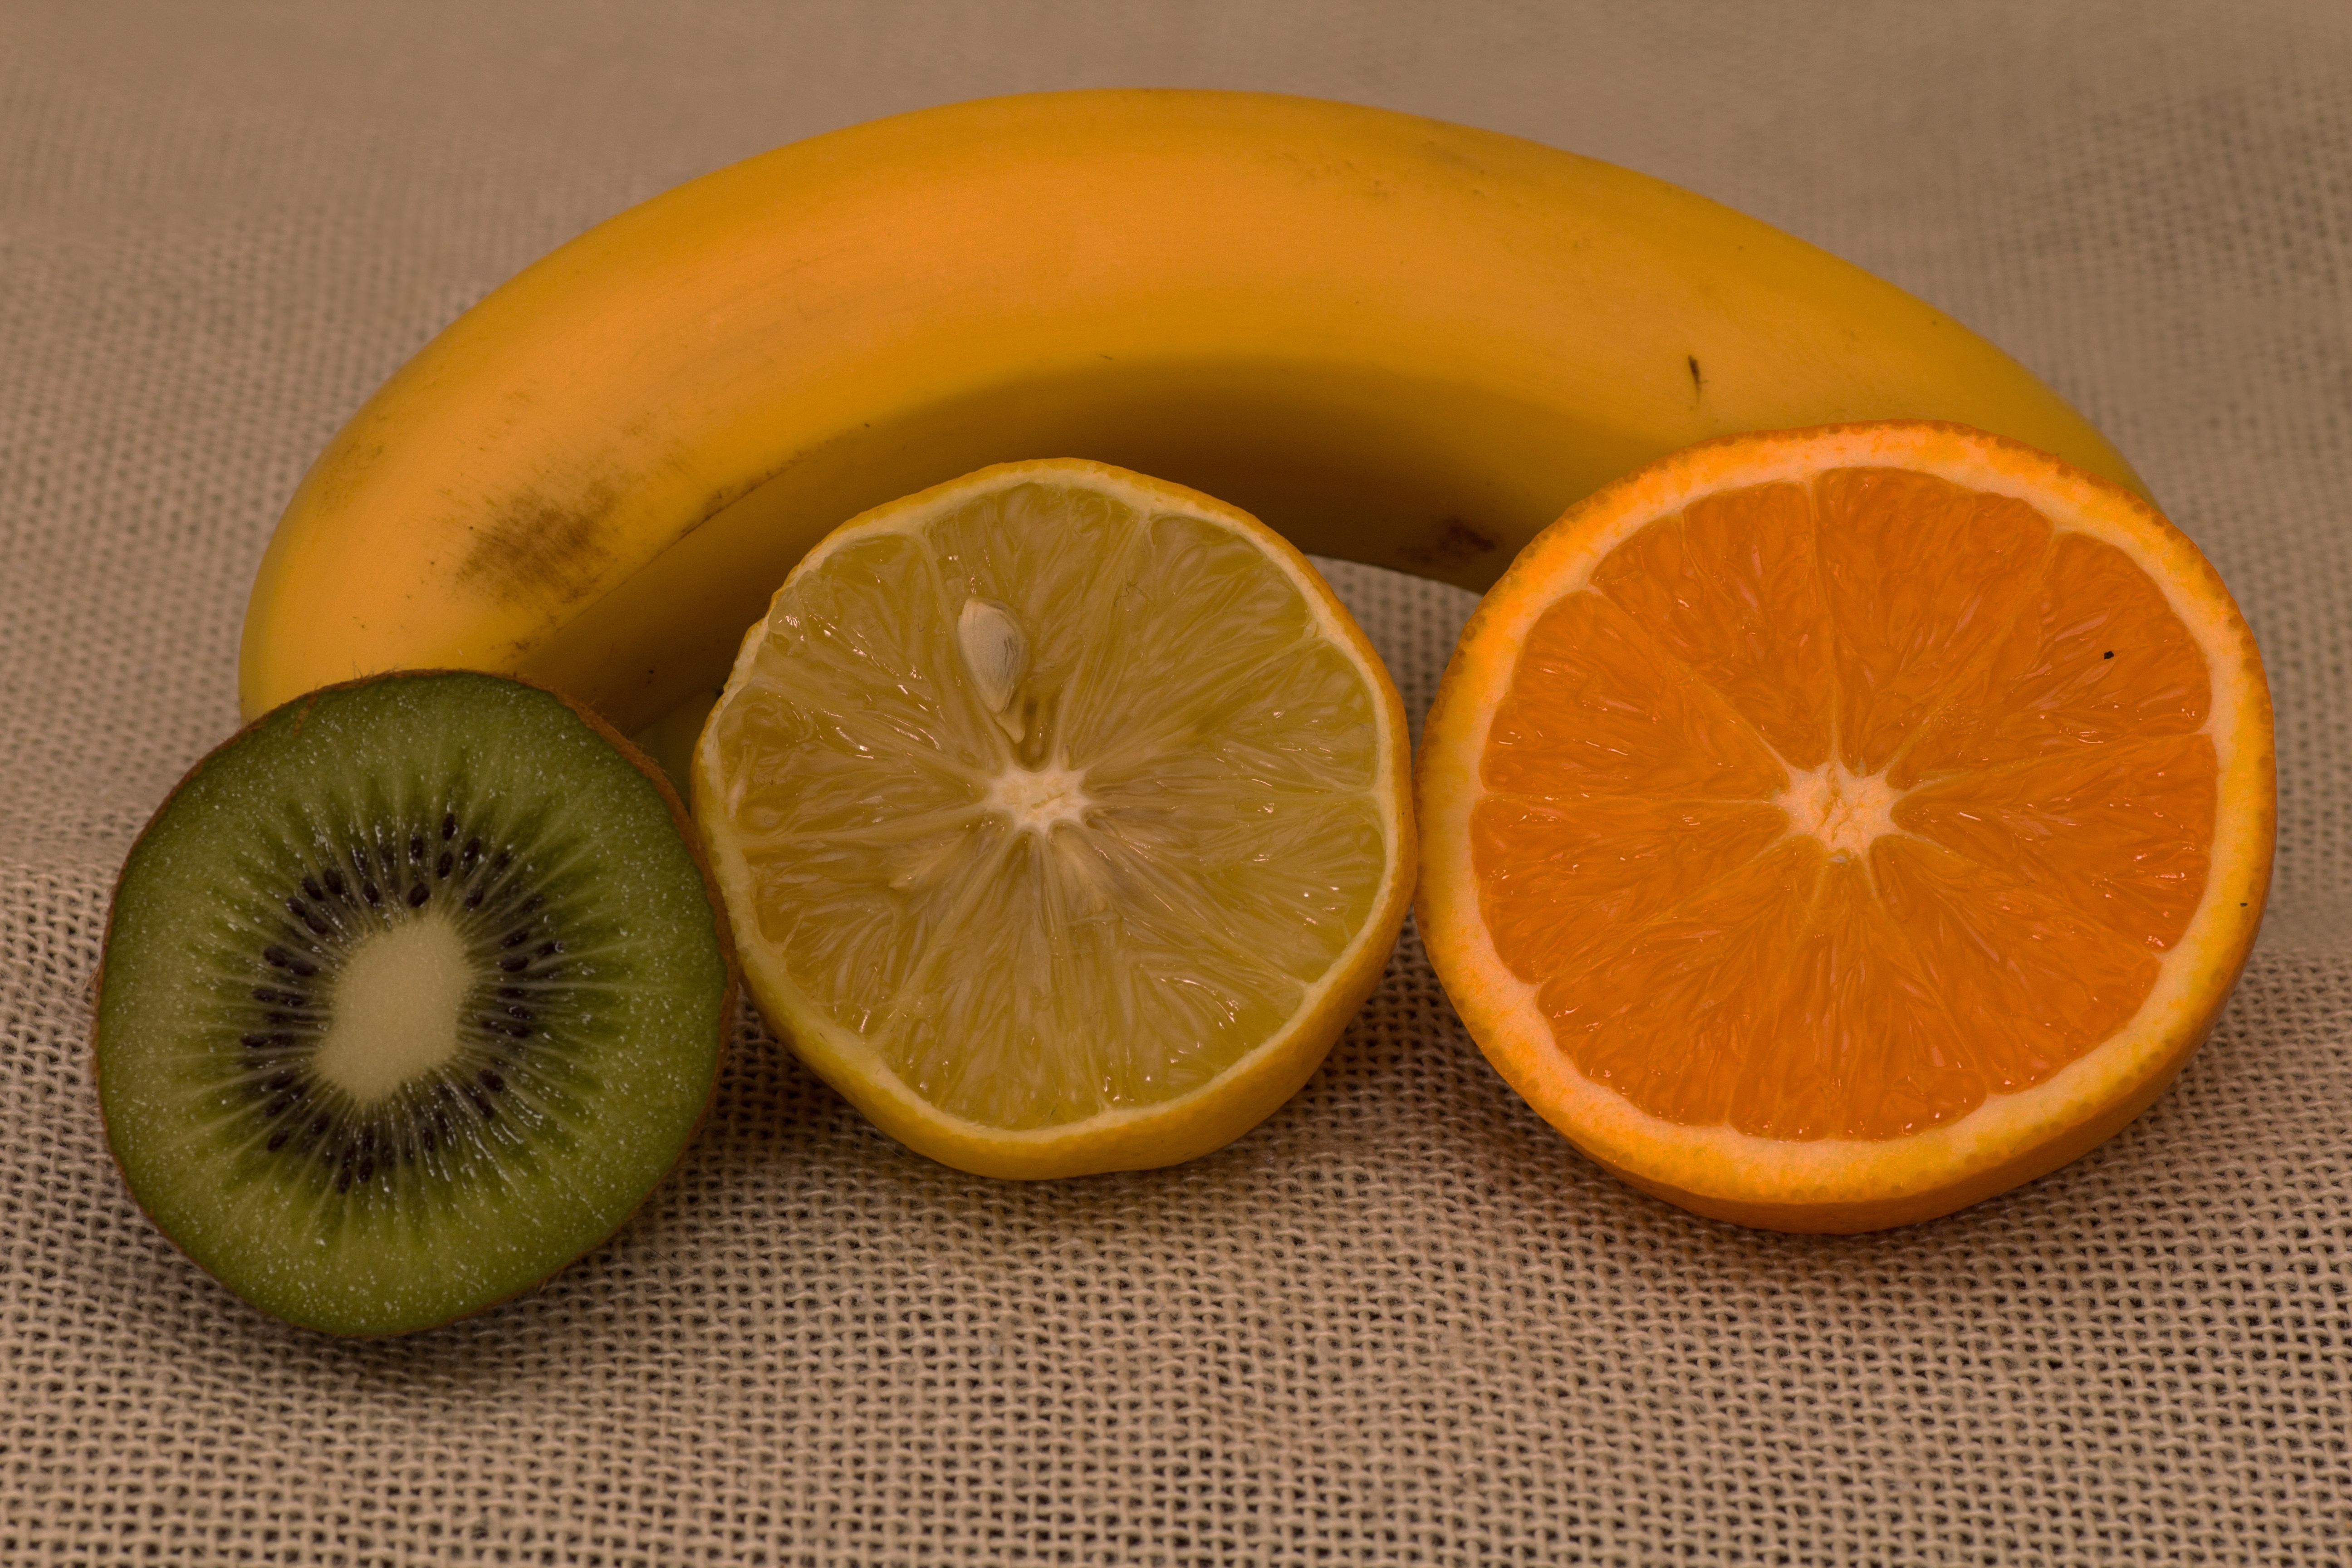 banana orange lemon and kiwi